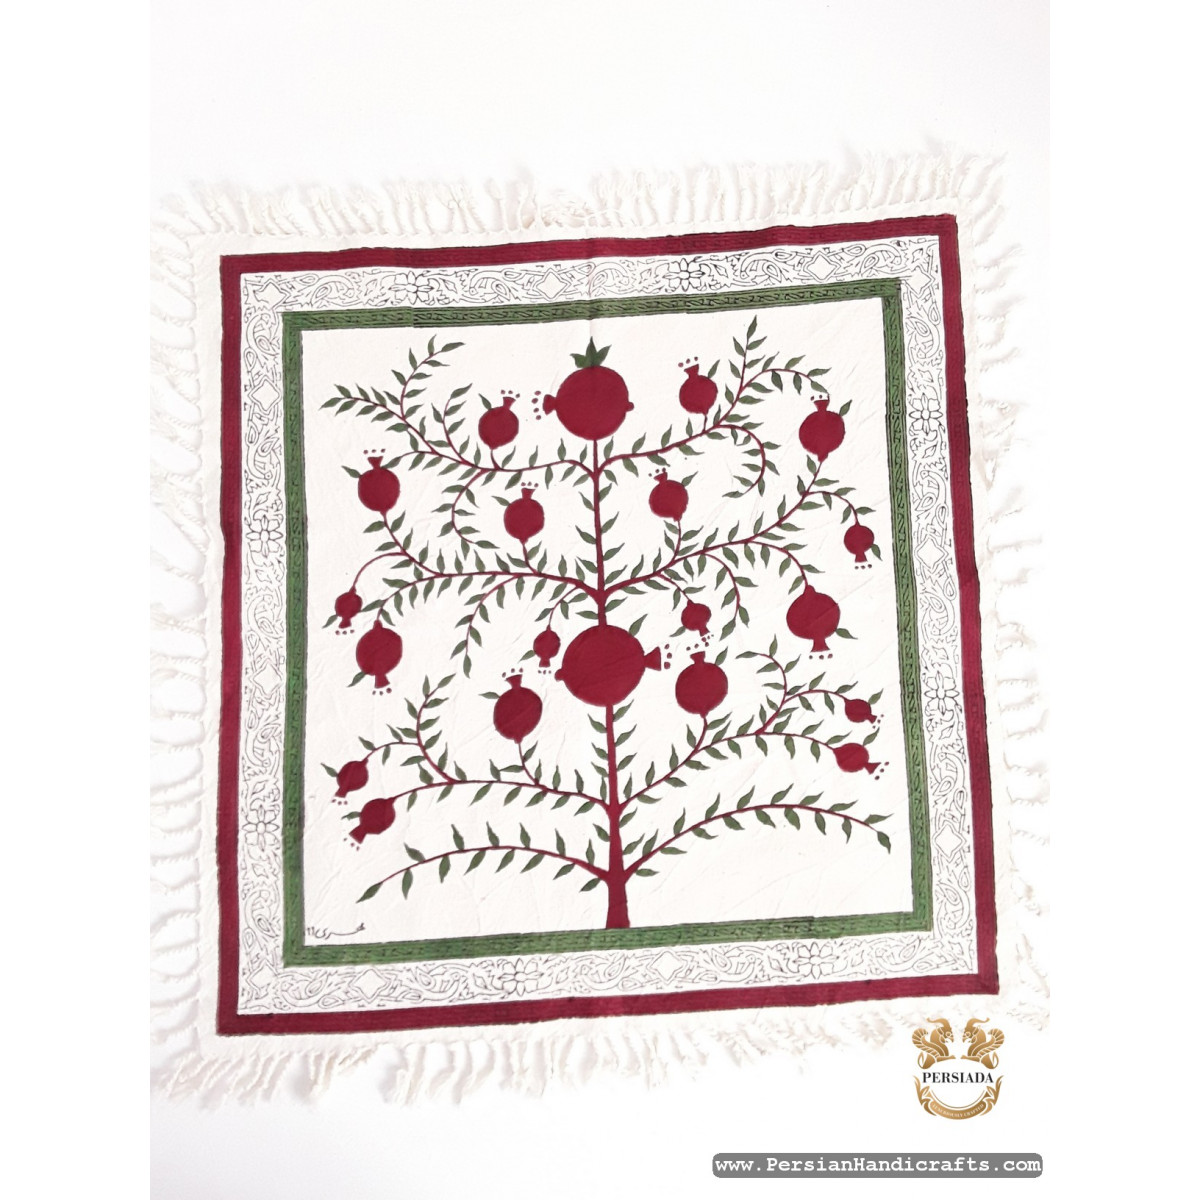 Runner Tablecloth | Handmade Organic Cotton | PHGH616